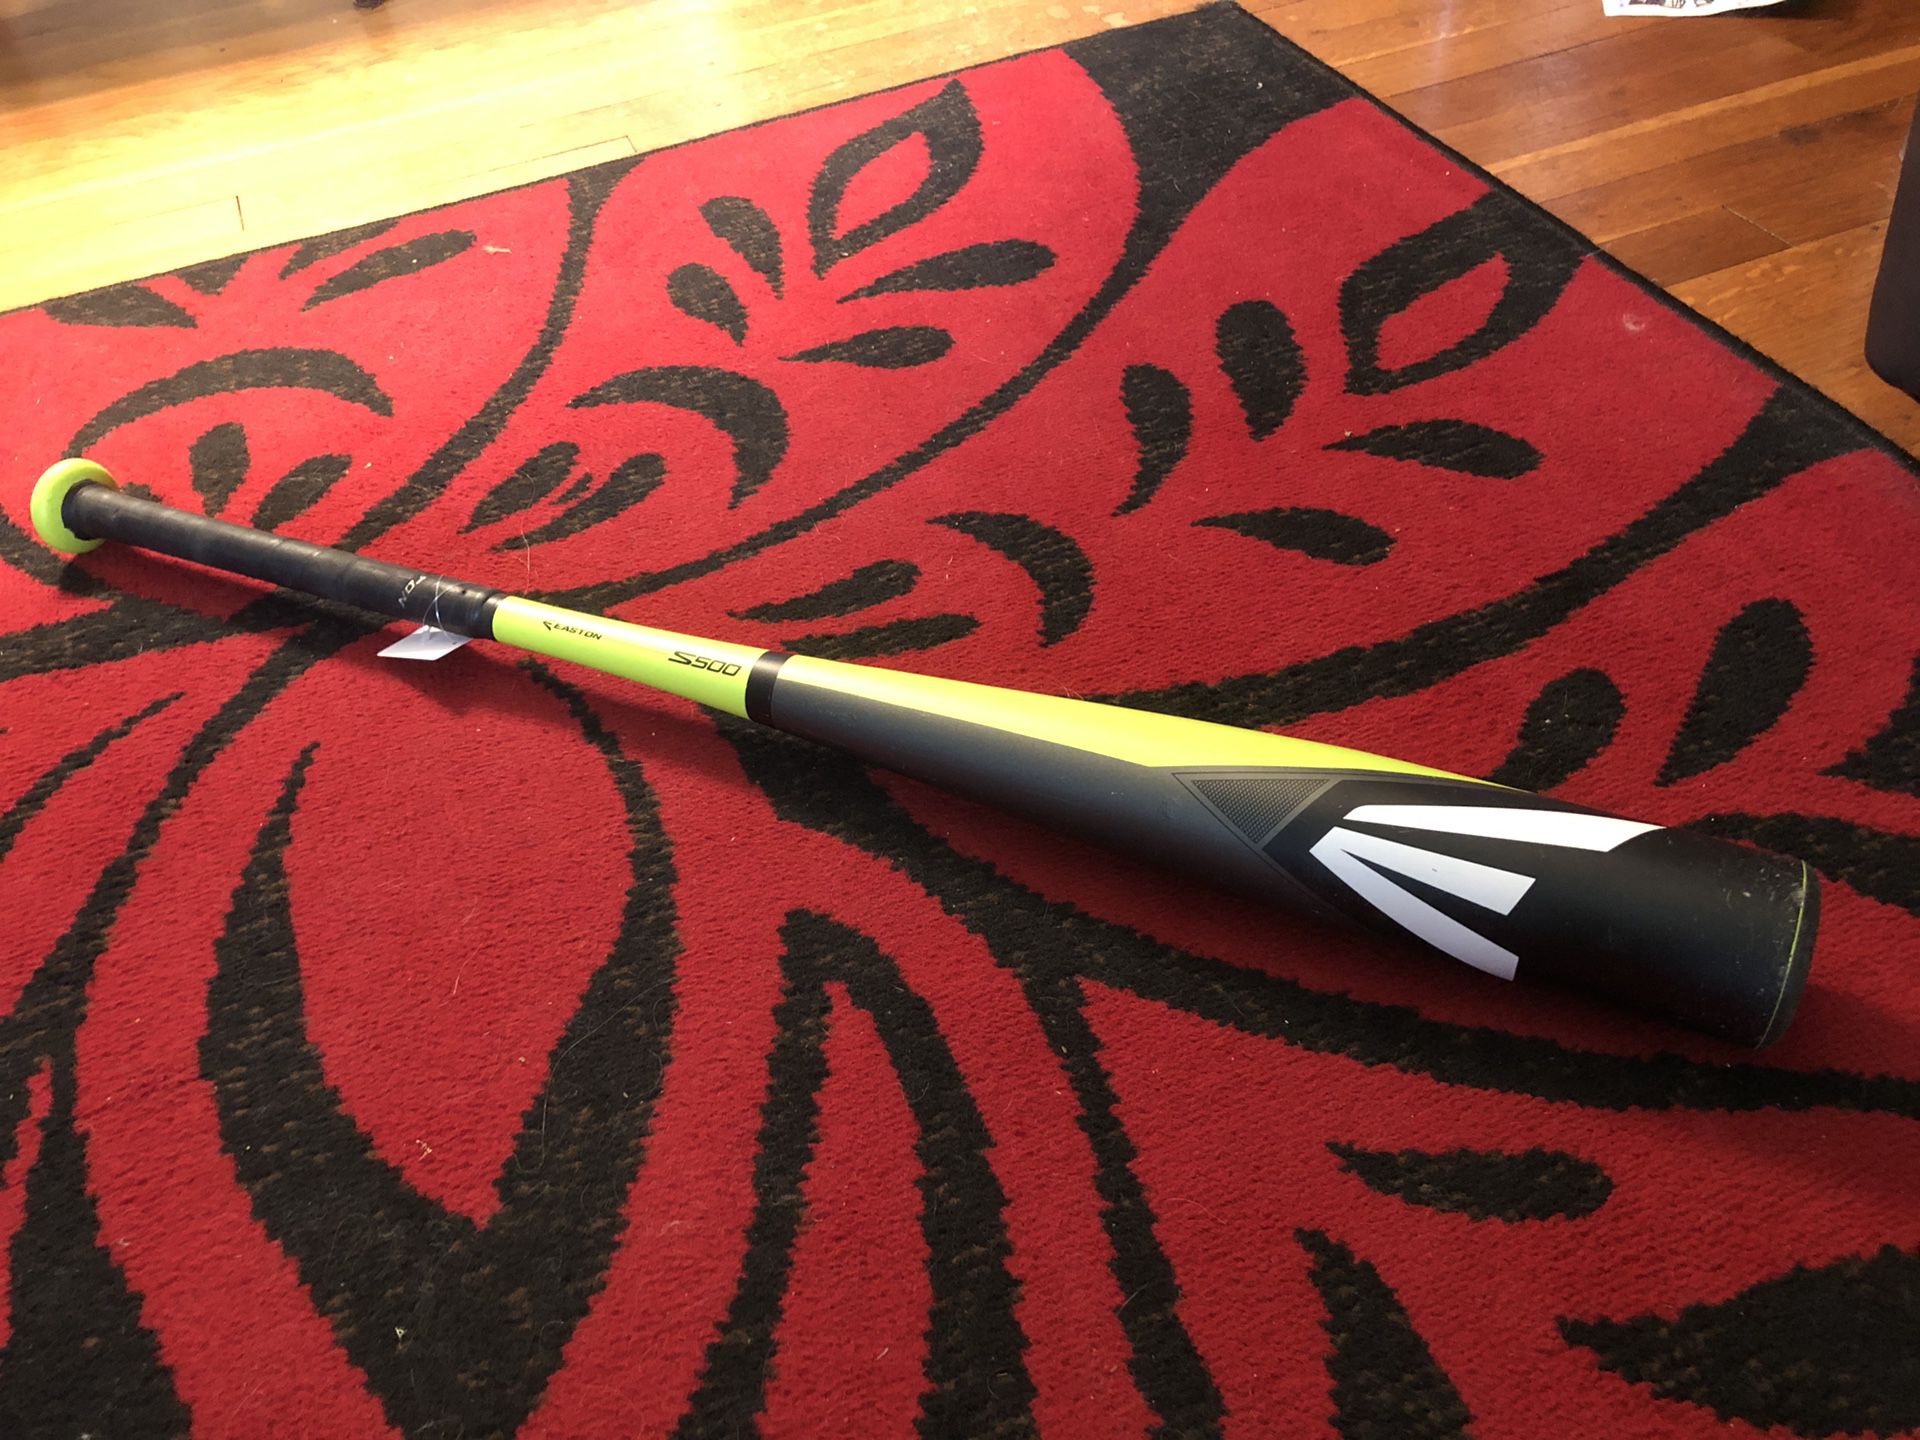 Easton S500 32”23oz big barrel baseball bat USSSA 1.15BPF